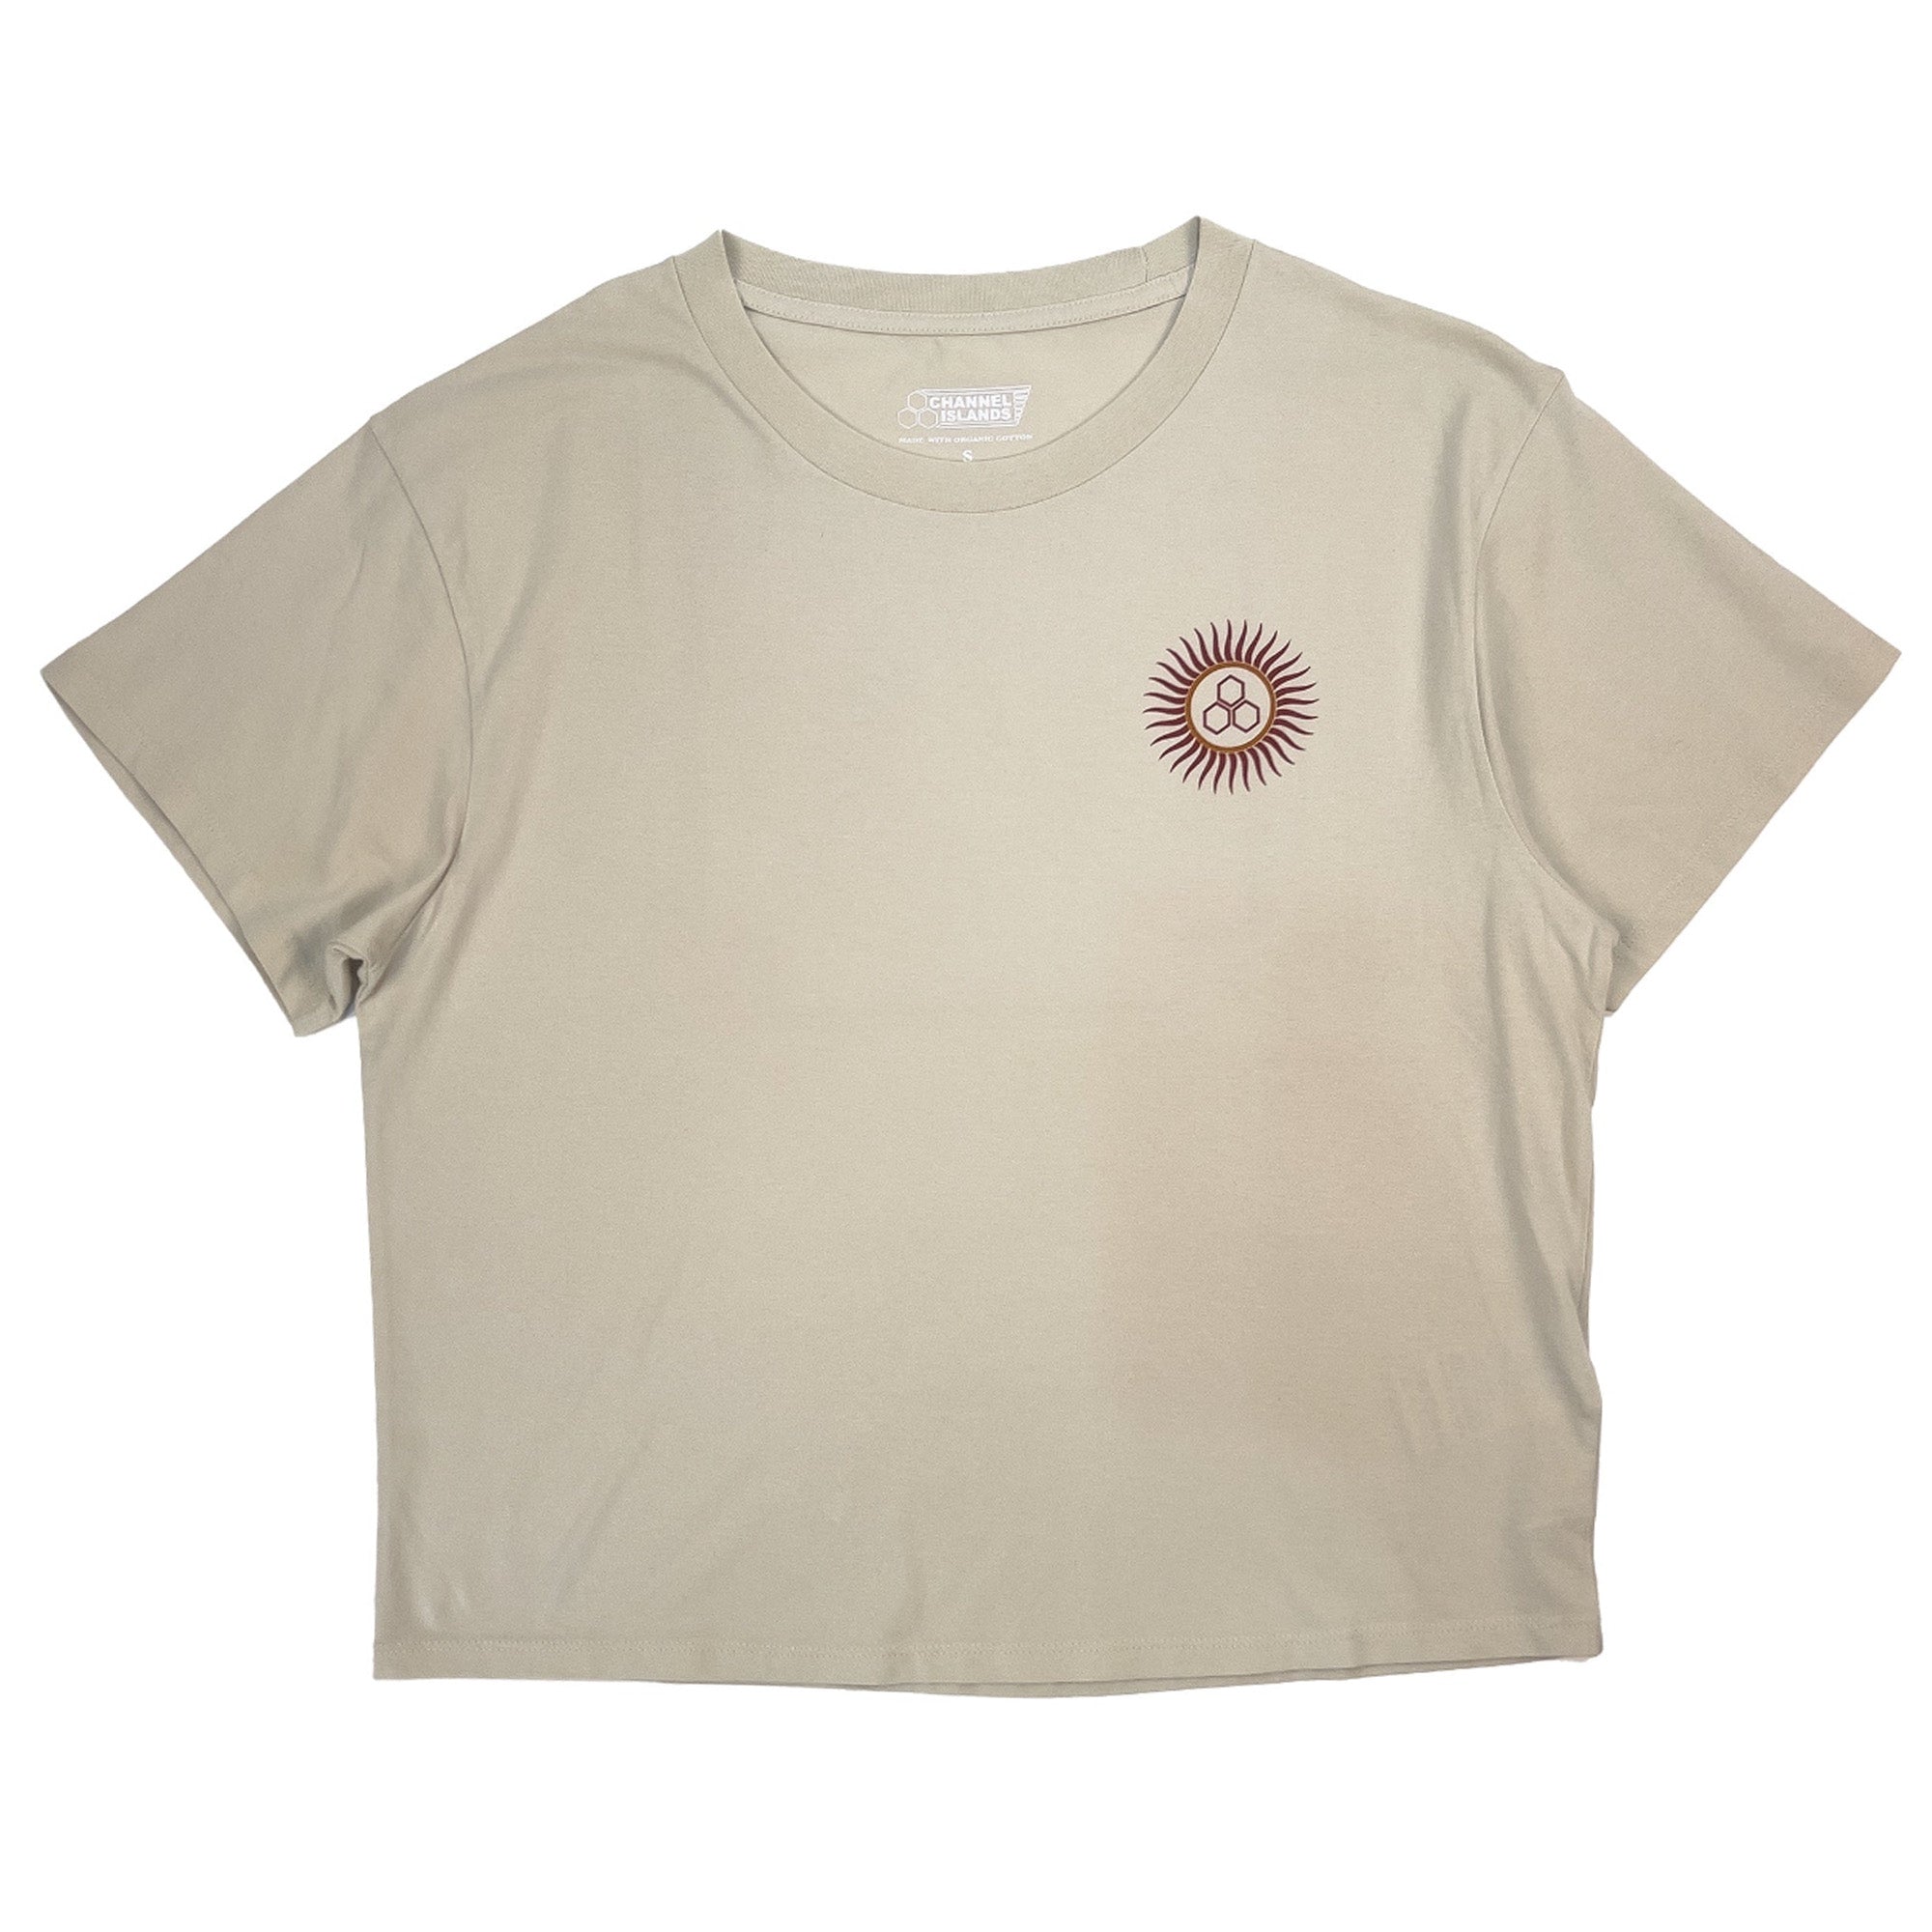 Channel Islands Sunhex Women's S/S T-Shirt